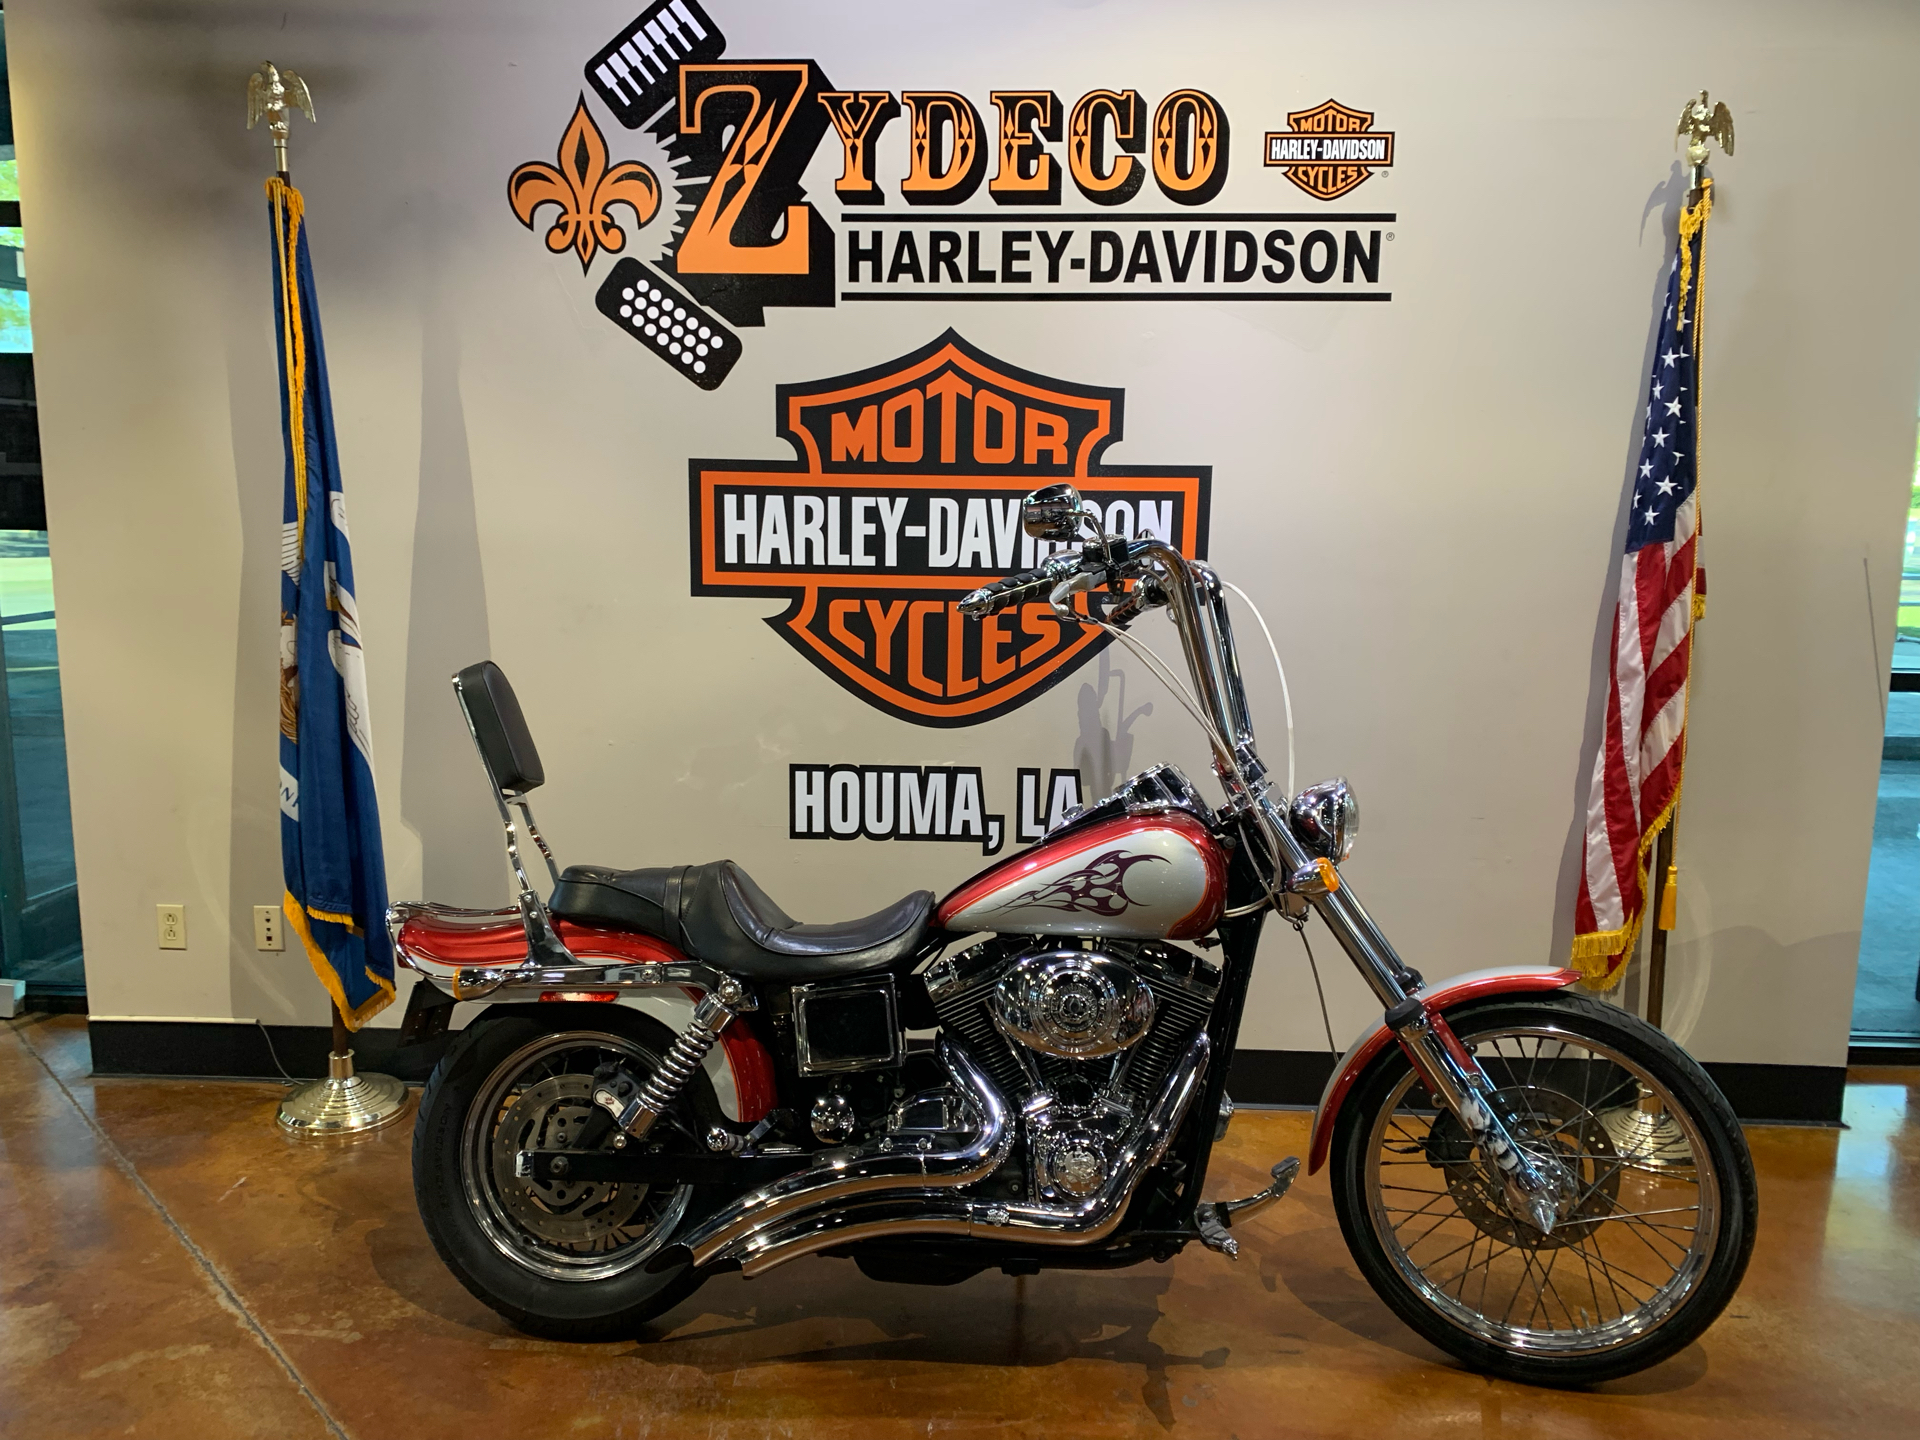 2004 Harley-Davidson Dyna Wide Glide - Photo 1